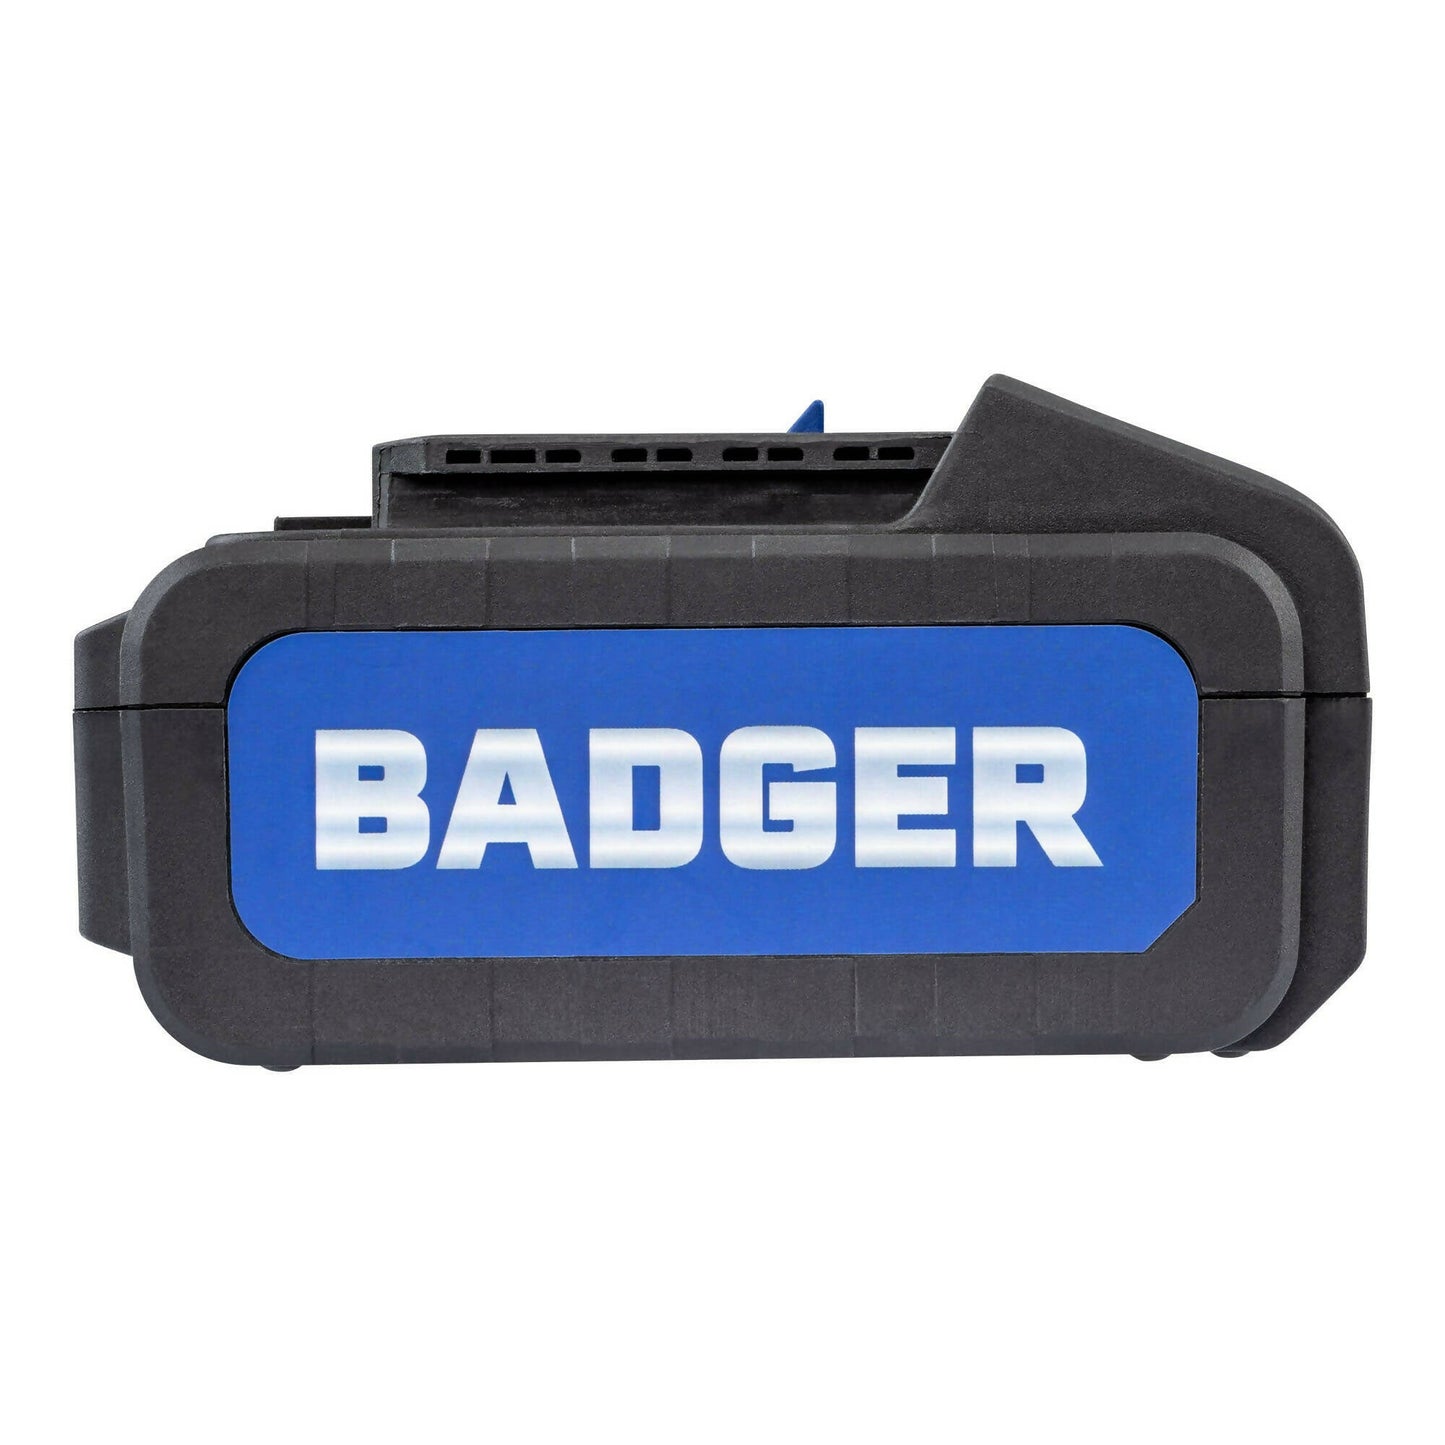 Wild Badger Power Cordless 20 Volt 4.0 Ah Battery